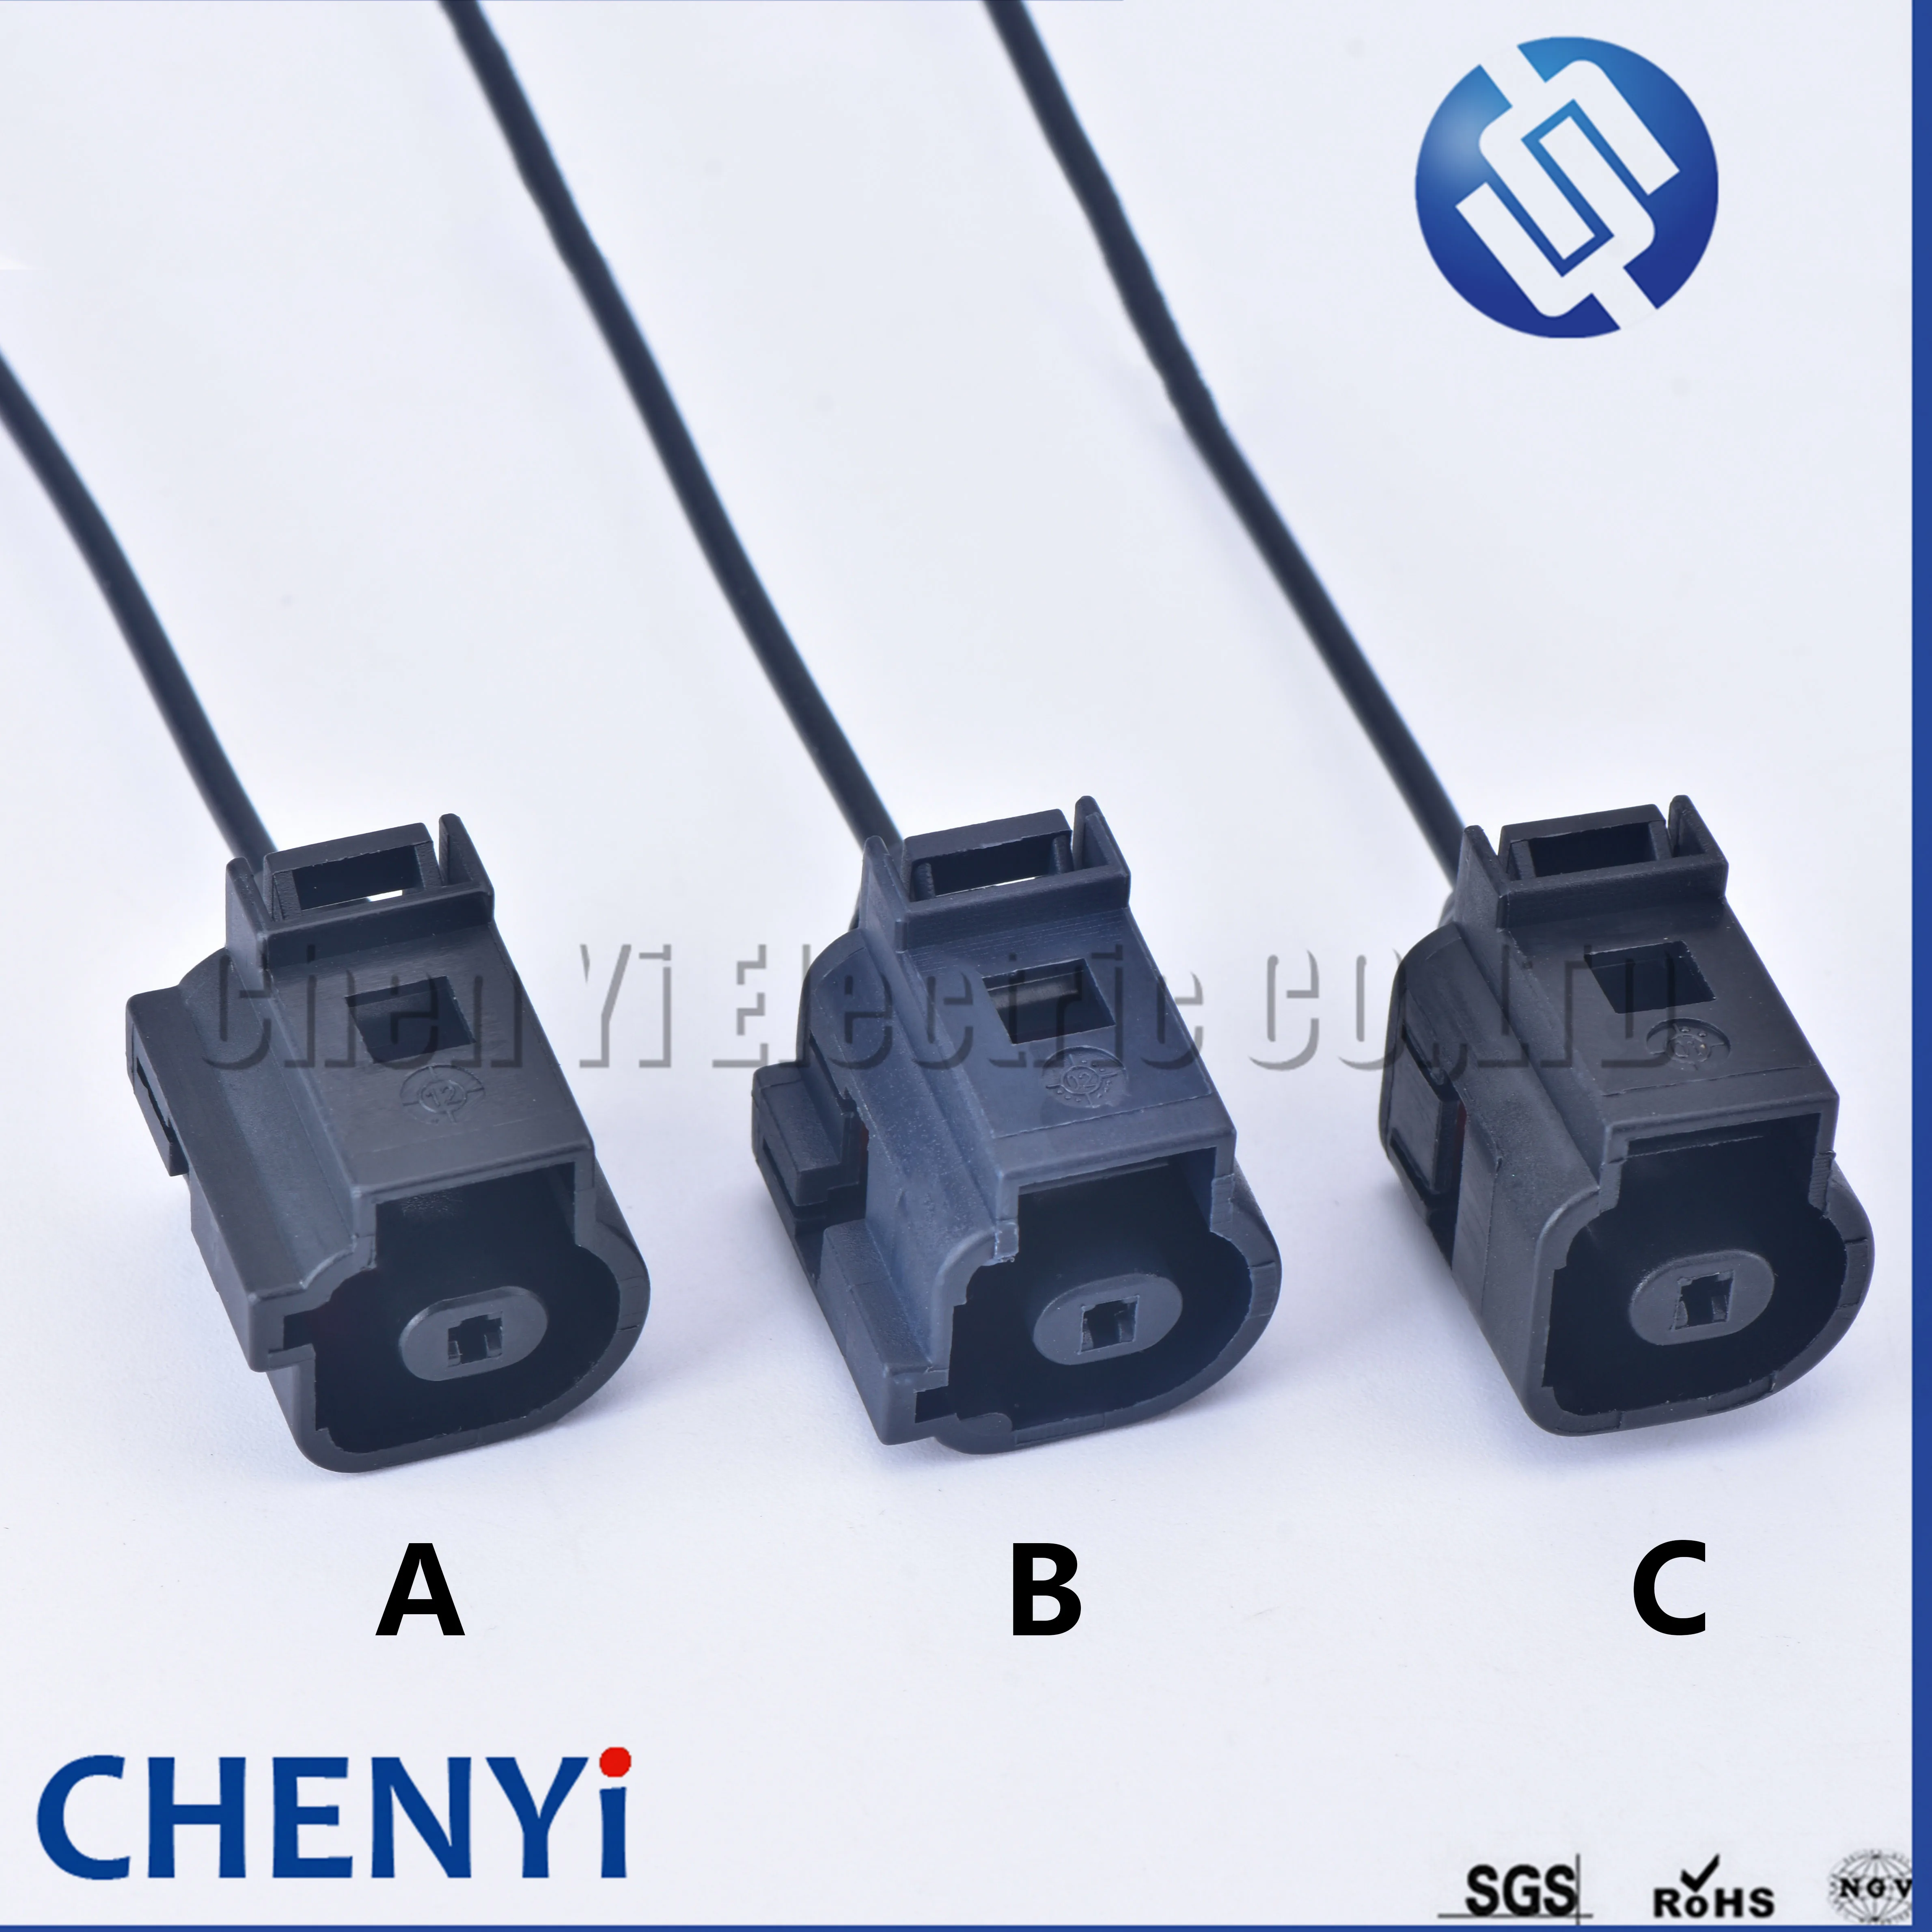 1 Set 1 Pin female Oil Pressure Sensor Connector Plug Horn 1.5mm Socket For Audi VW Jetta Golf GTI Passat 1J0937081 with wires